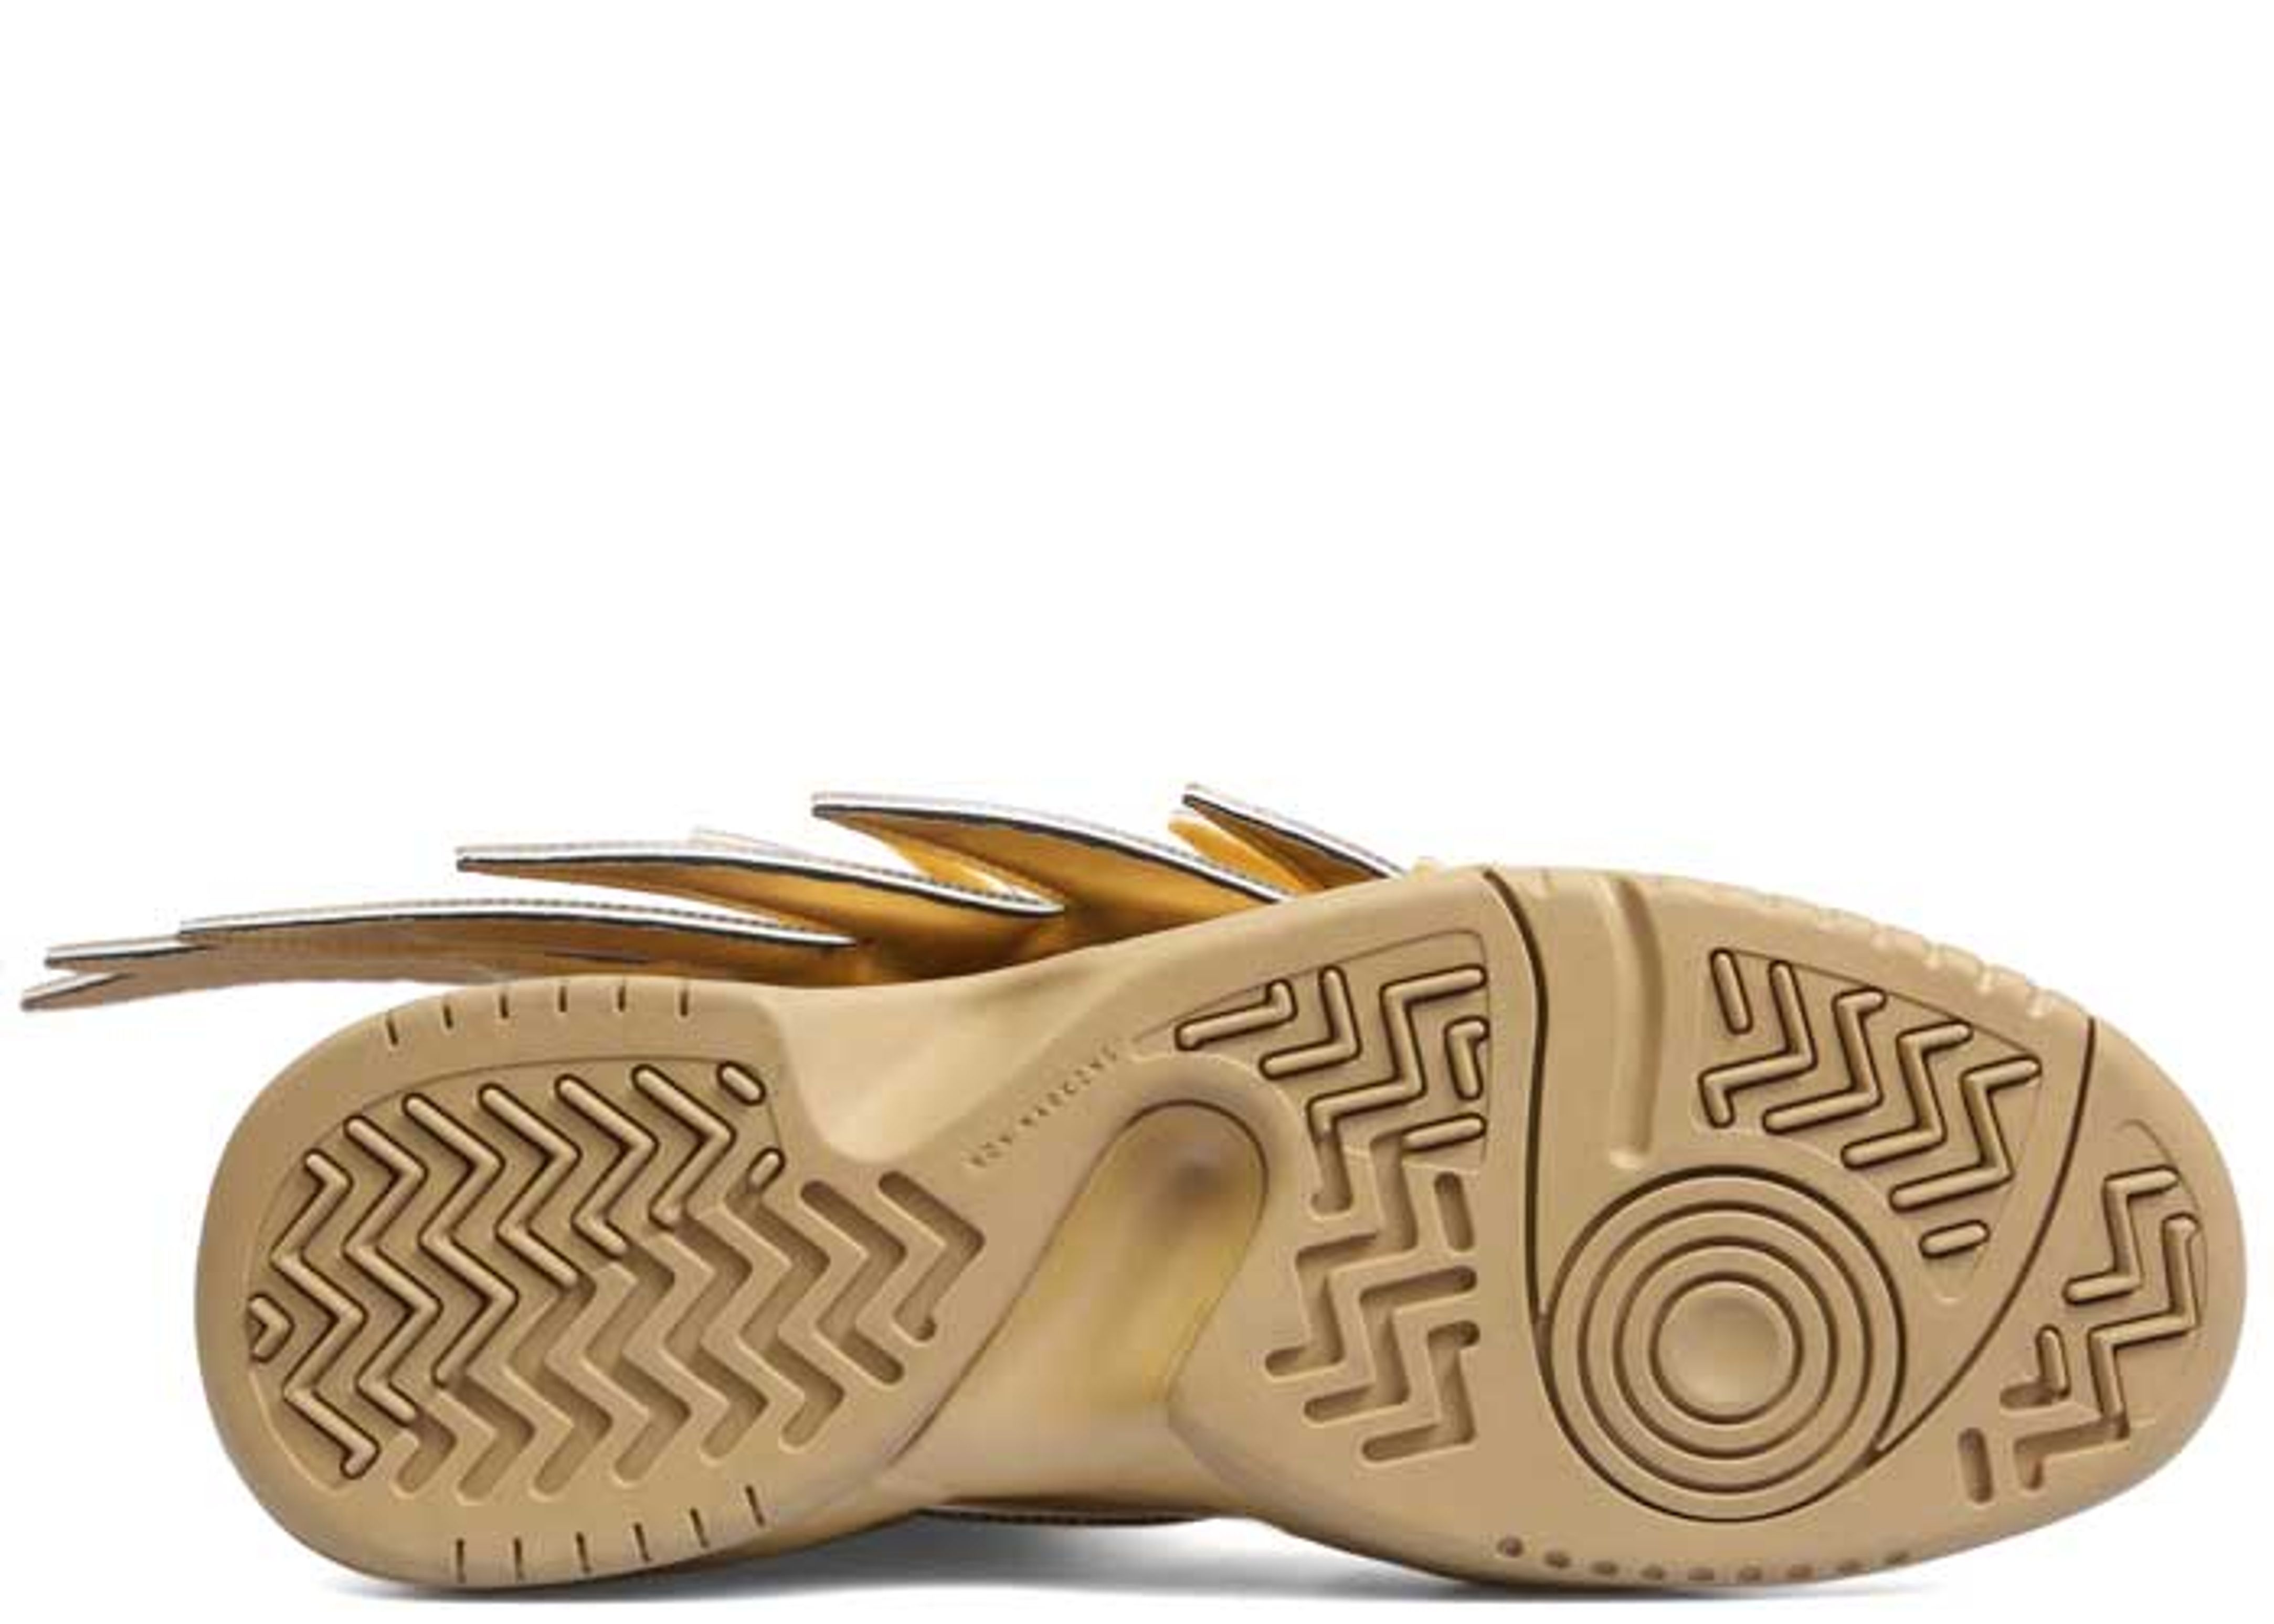 adidas js wings 3.0 gold men's shoes gold metallic b35651